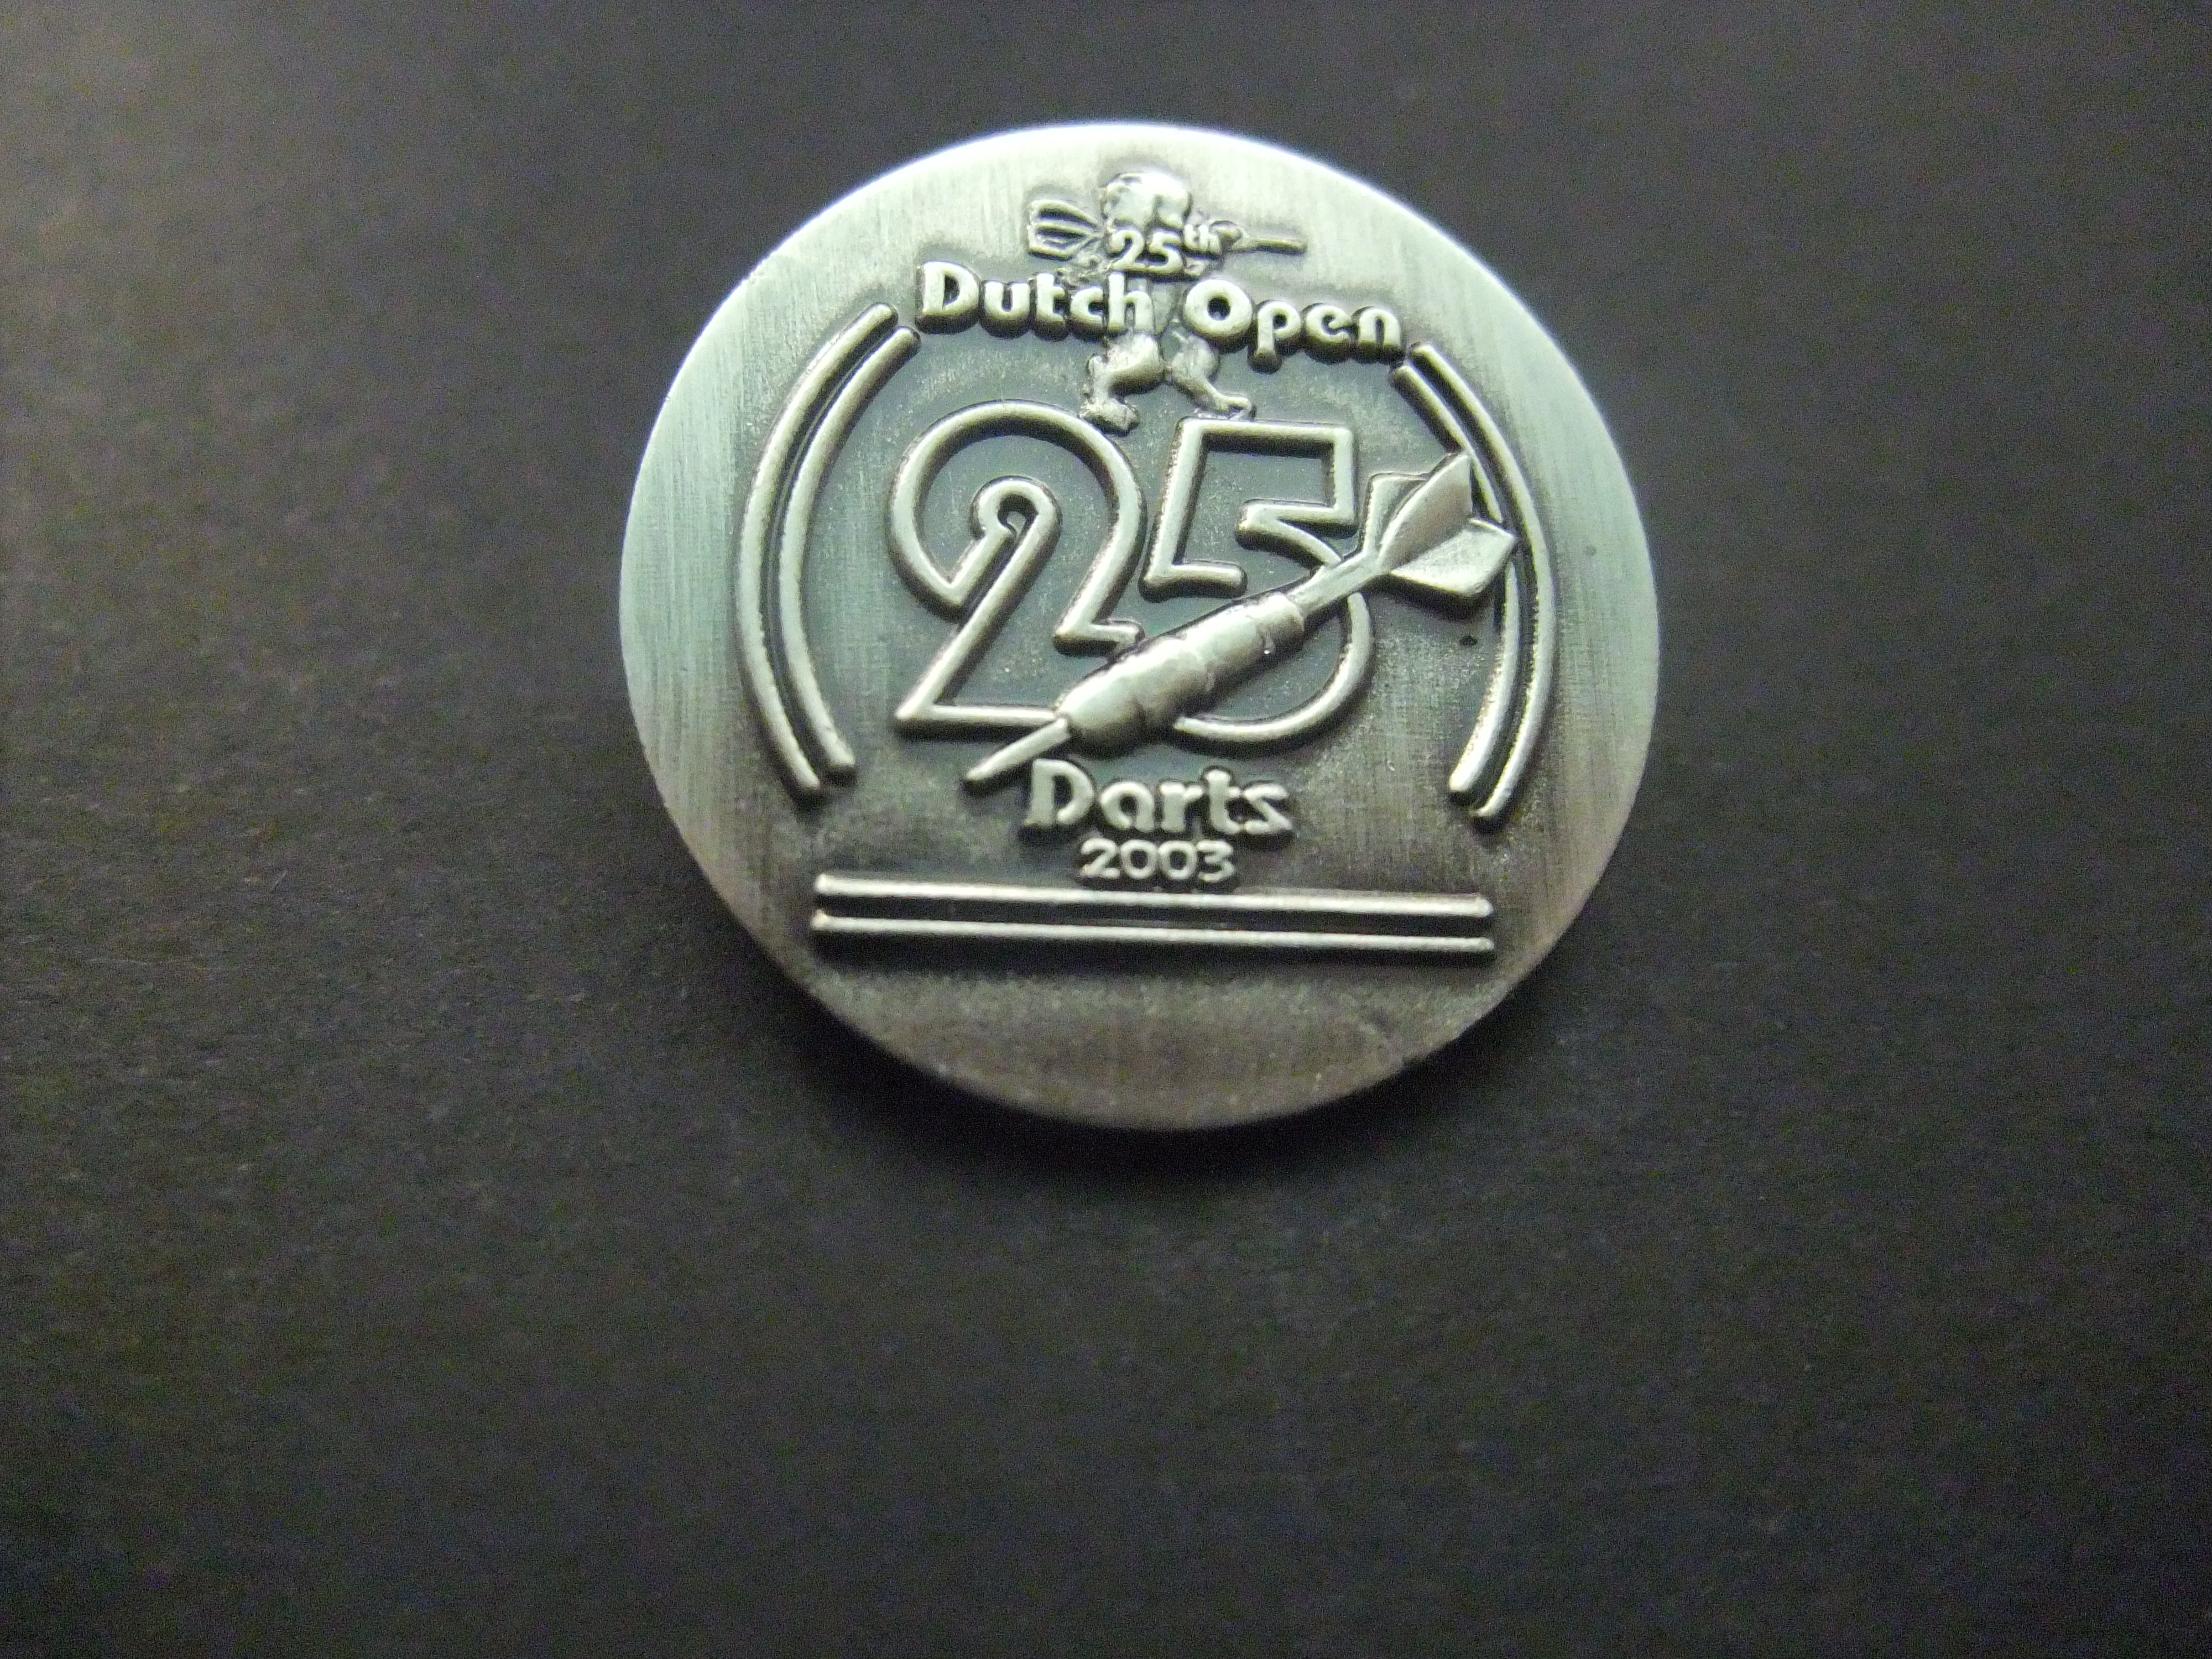 25e Dutch Open Dartstoernooi 2003 zilverkleurig